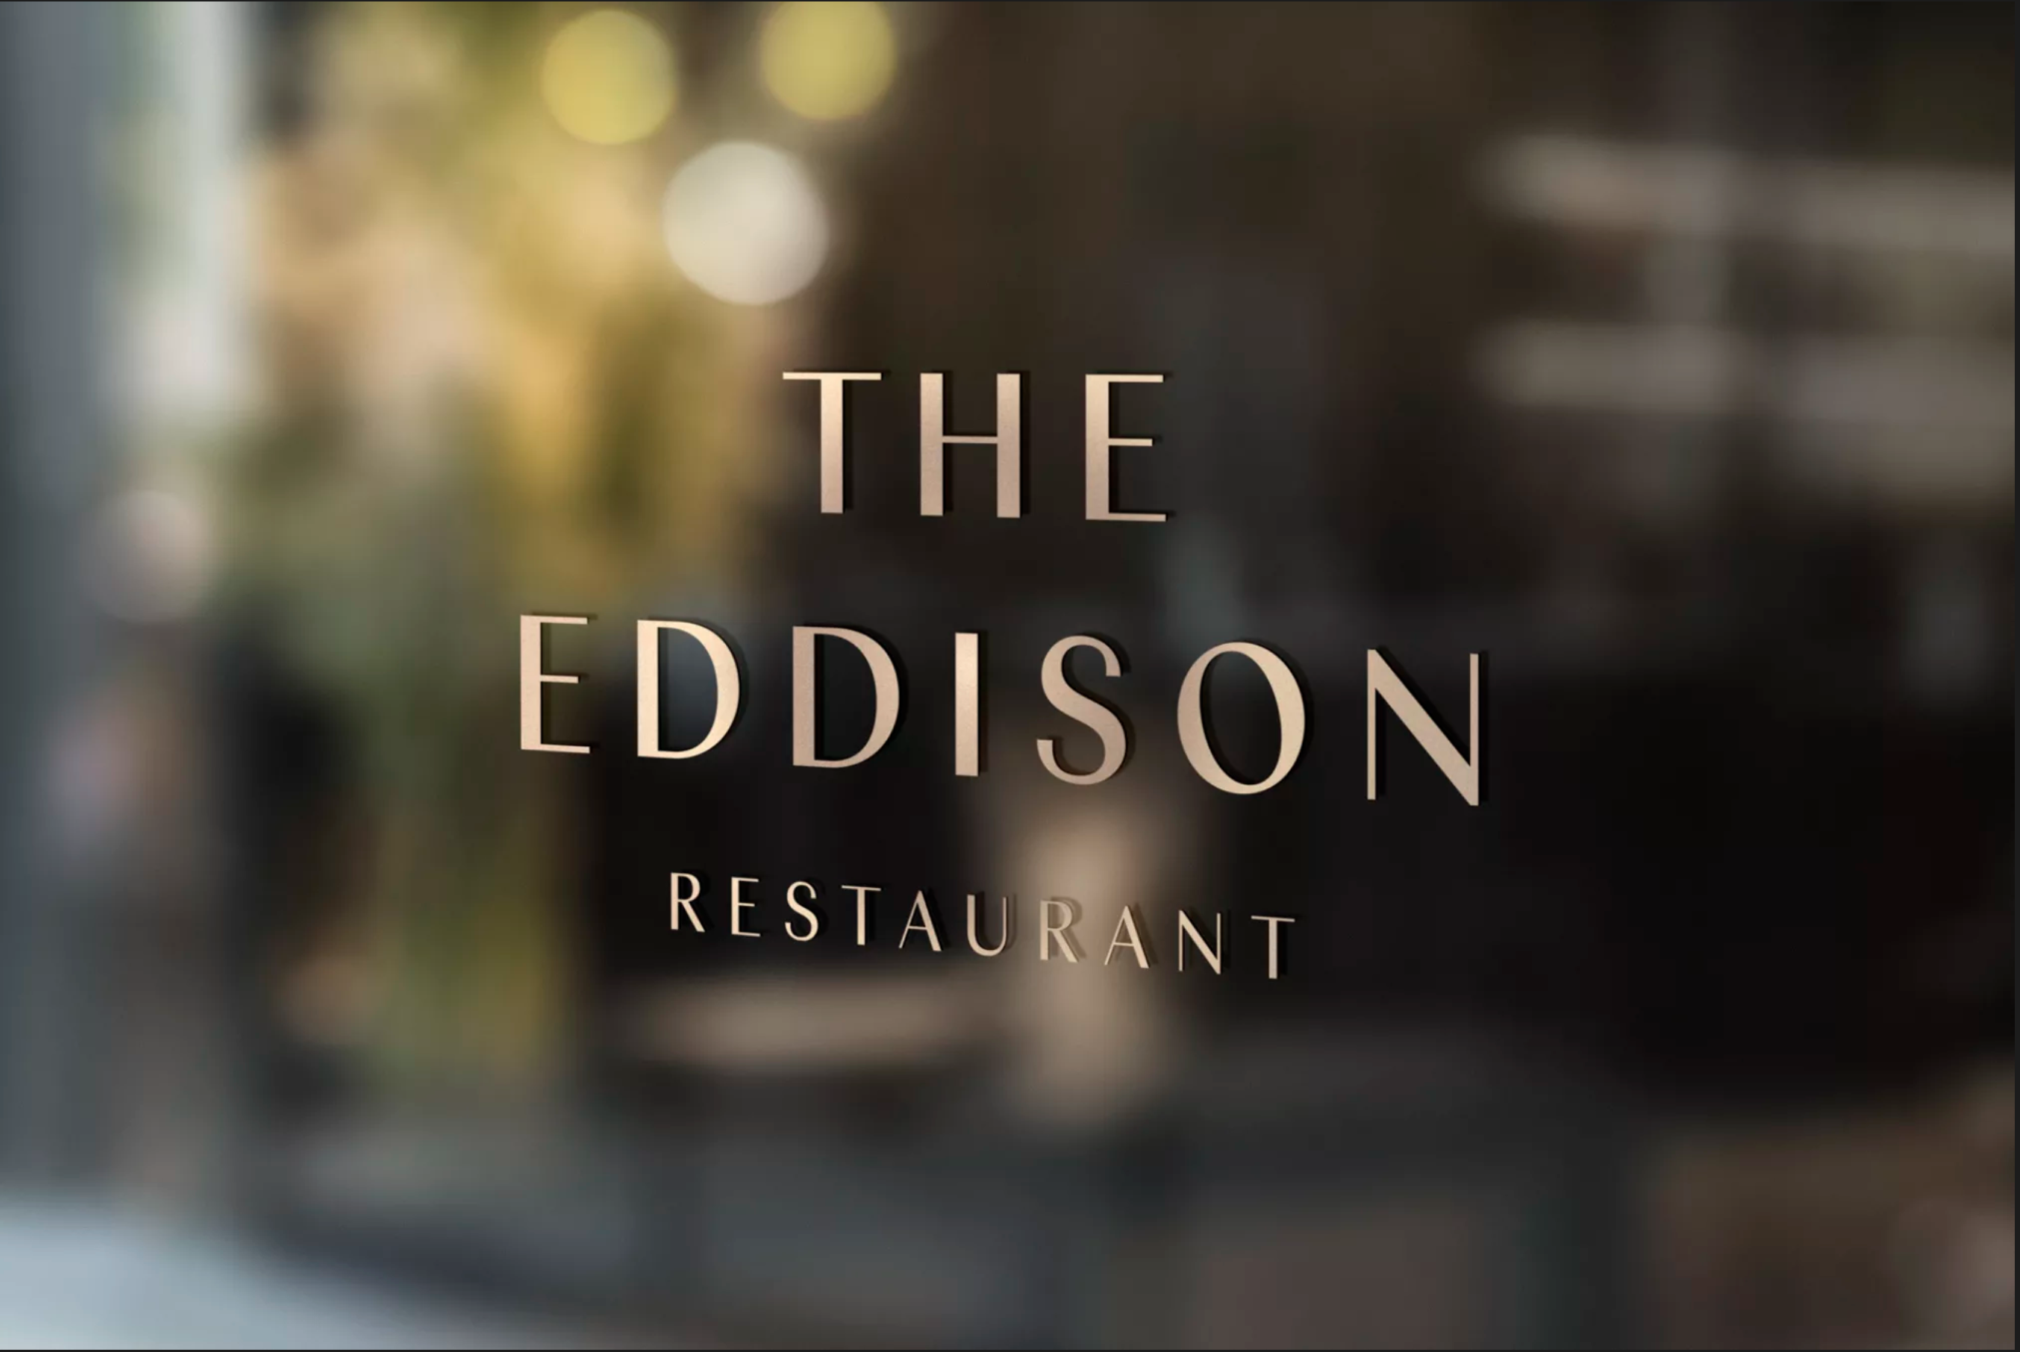 The Eddison Restaurant